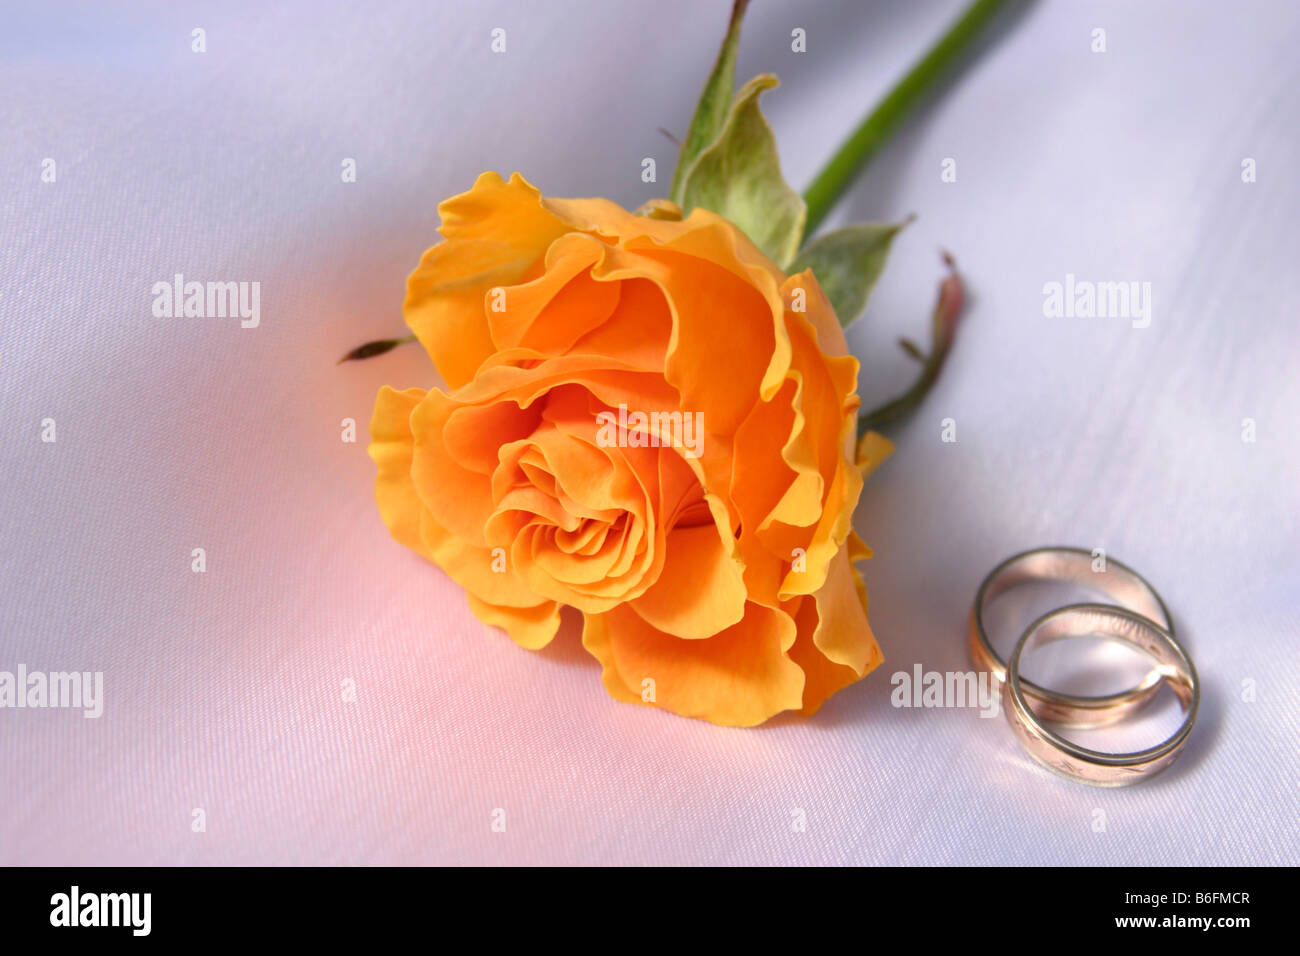 Orange rose and wedding rings Stock Photo